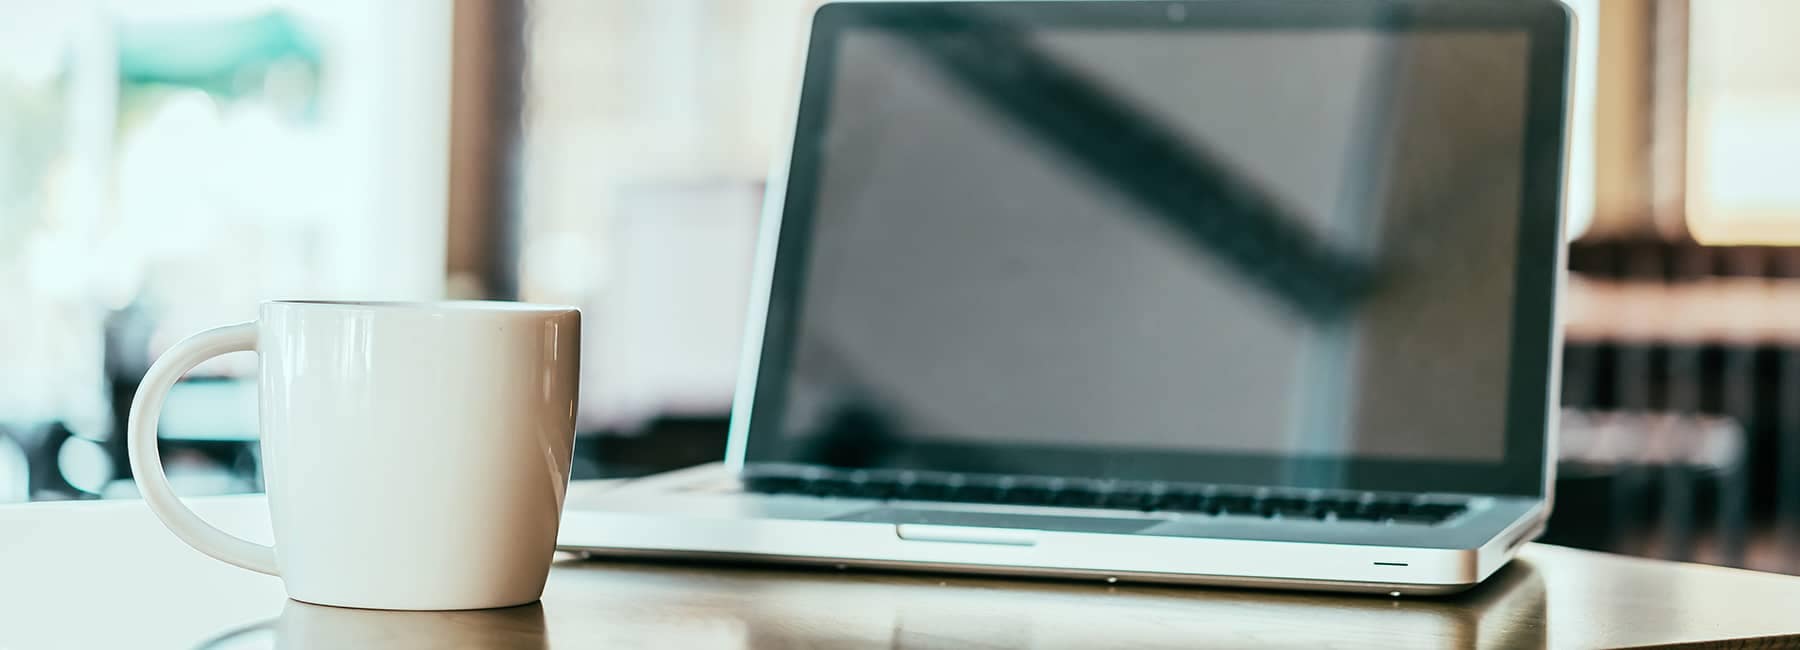 laptop and coffee mug